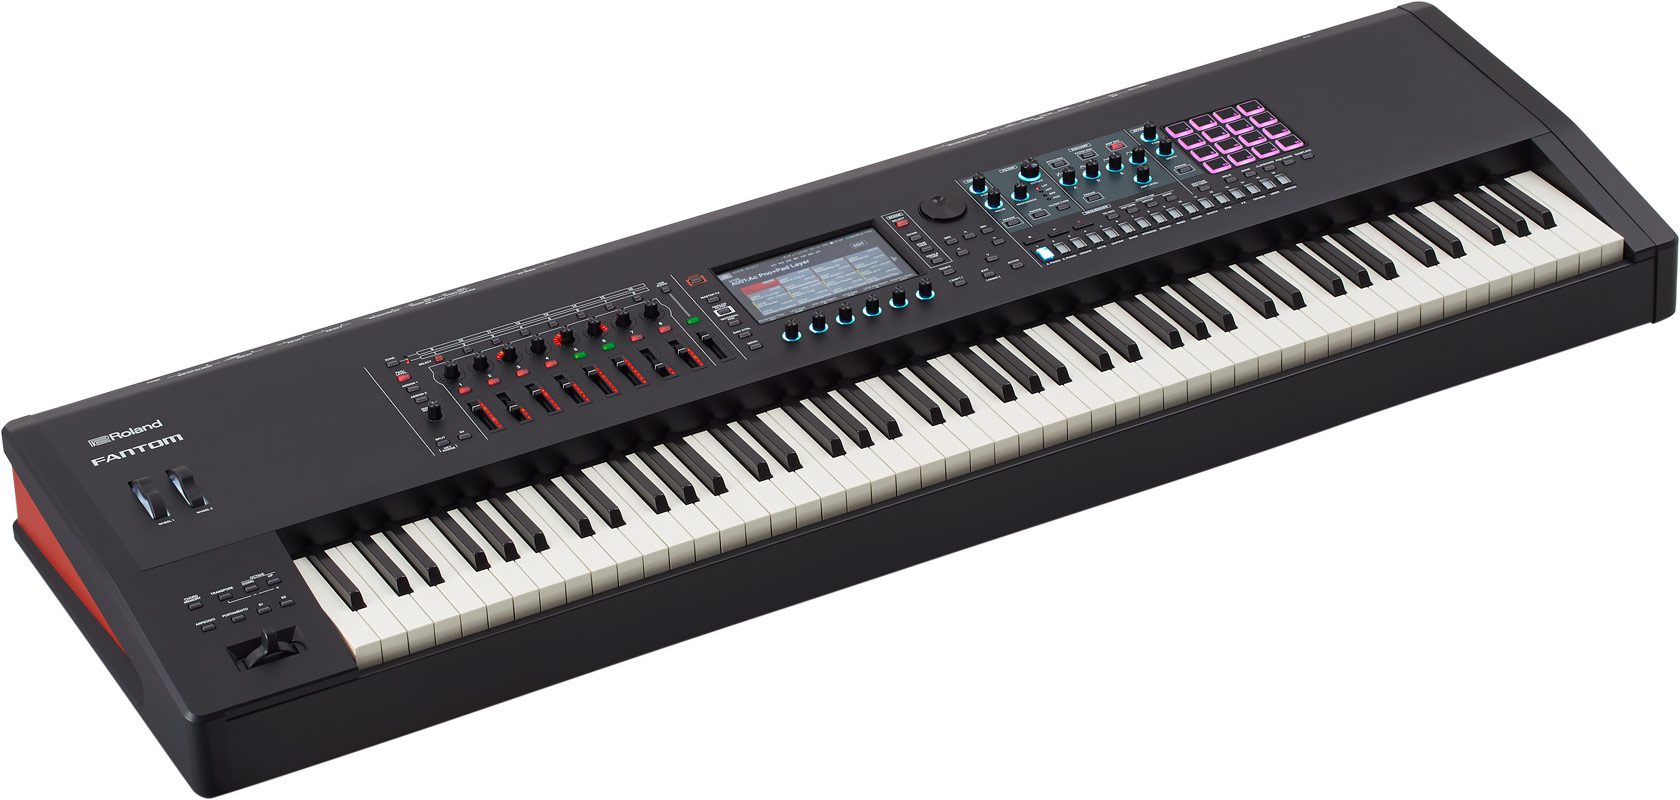 Roland FANTOM 8 Synthesizer Keyboard